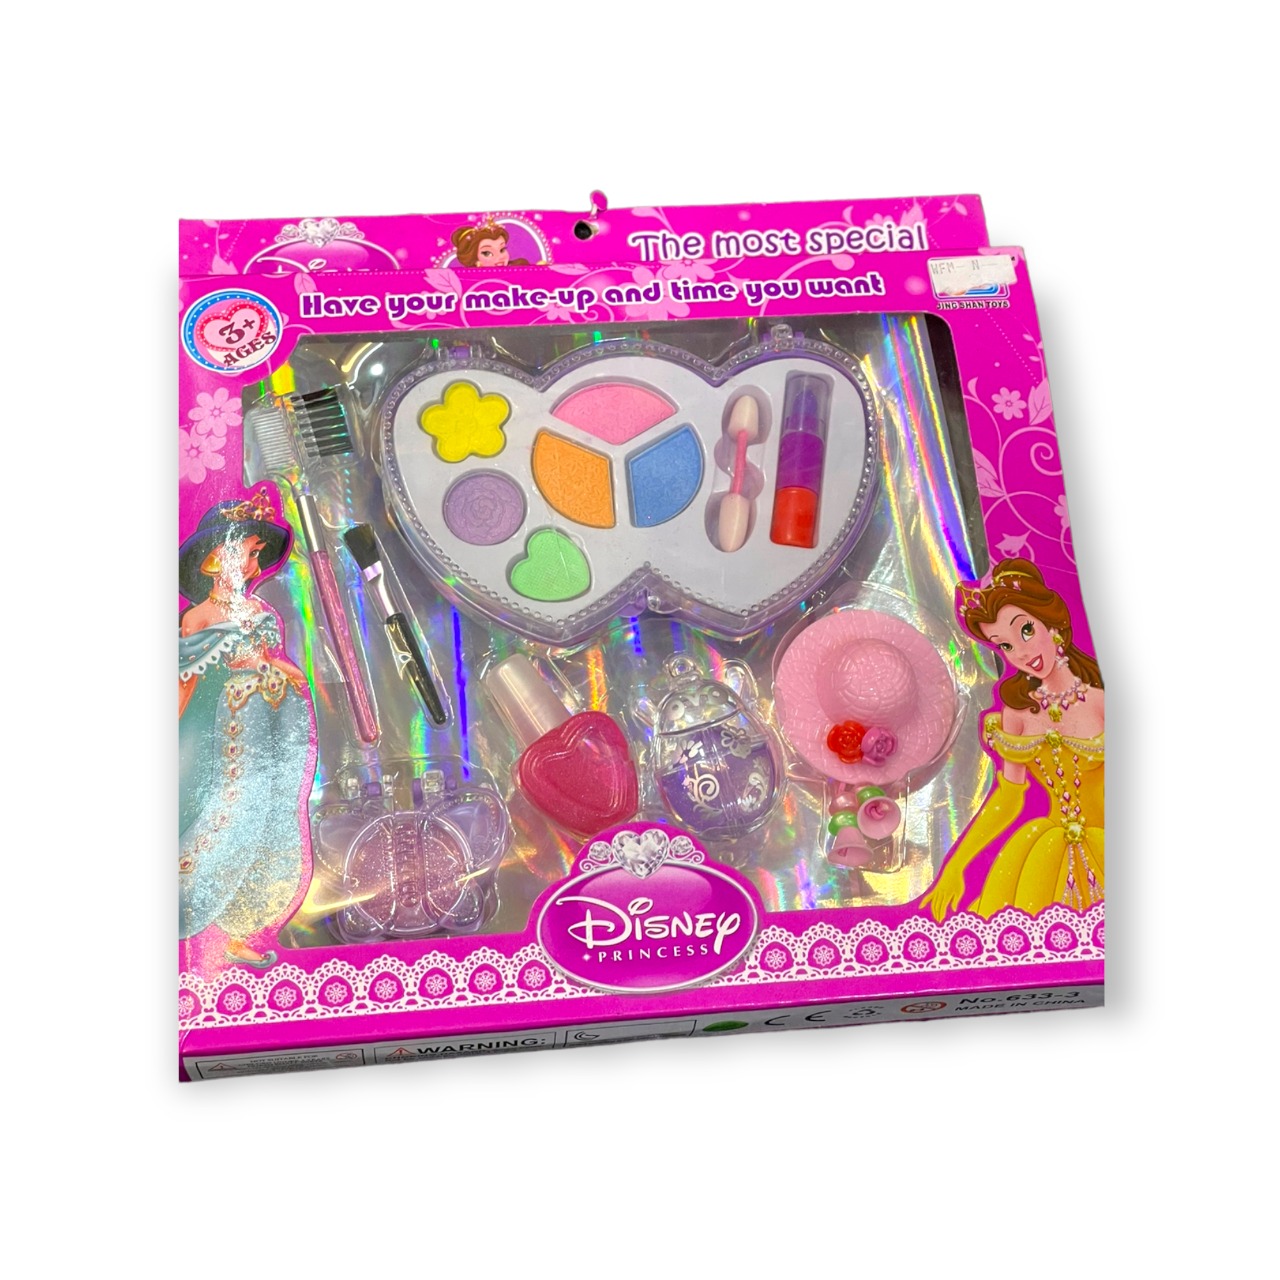 Disnep Princess Make-up Set for Girls